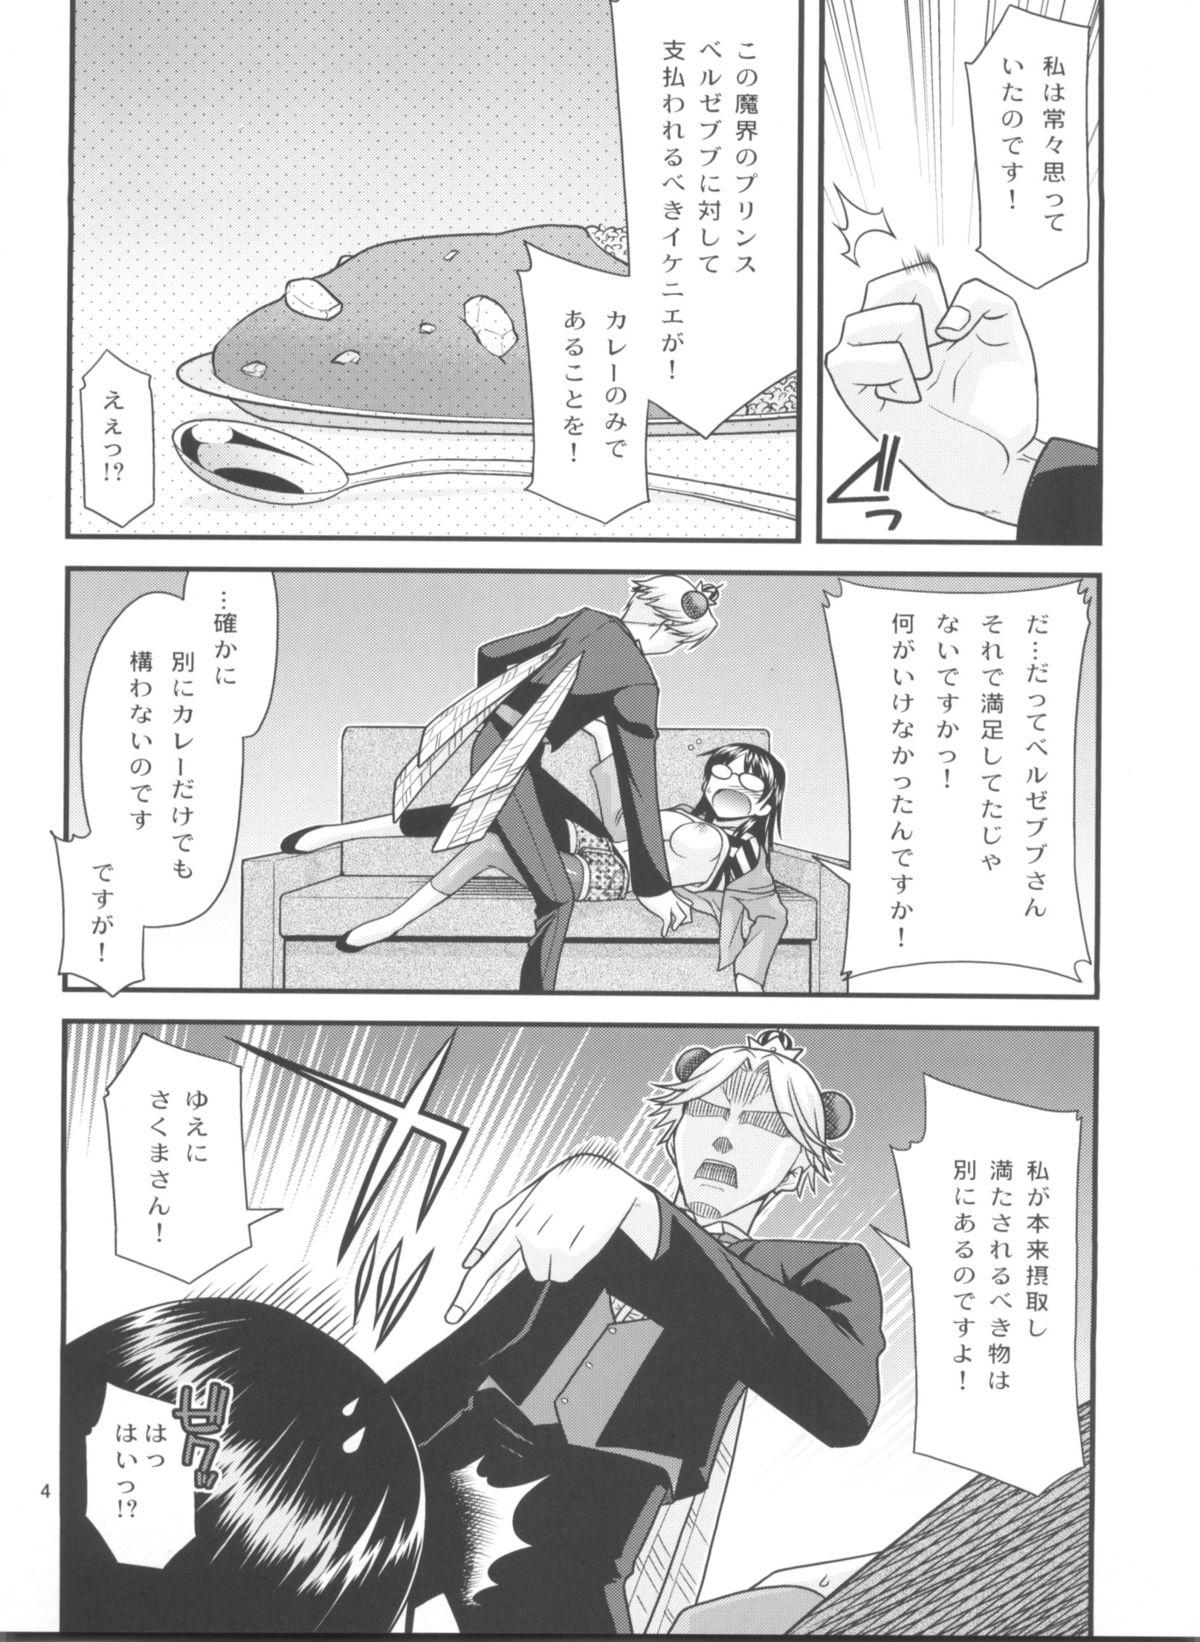 Latex Itadakimasuyo, Sakuma-san. - Yondemasuyo azazel san Chicks - Page 3